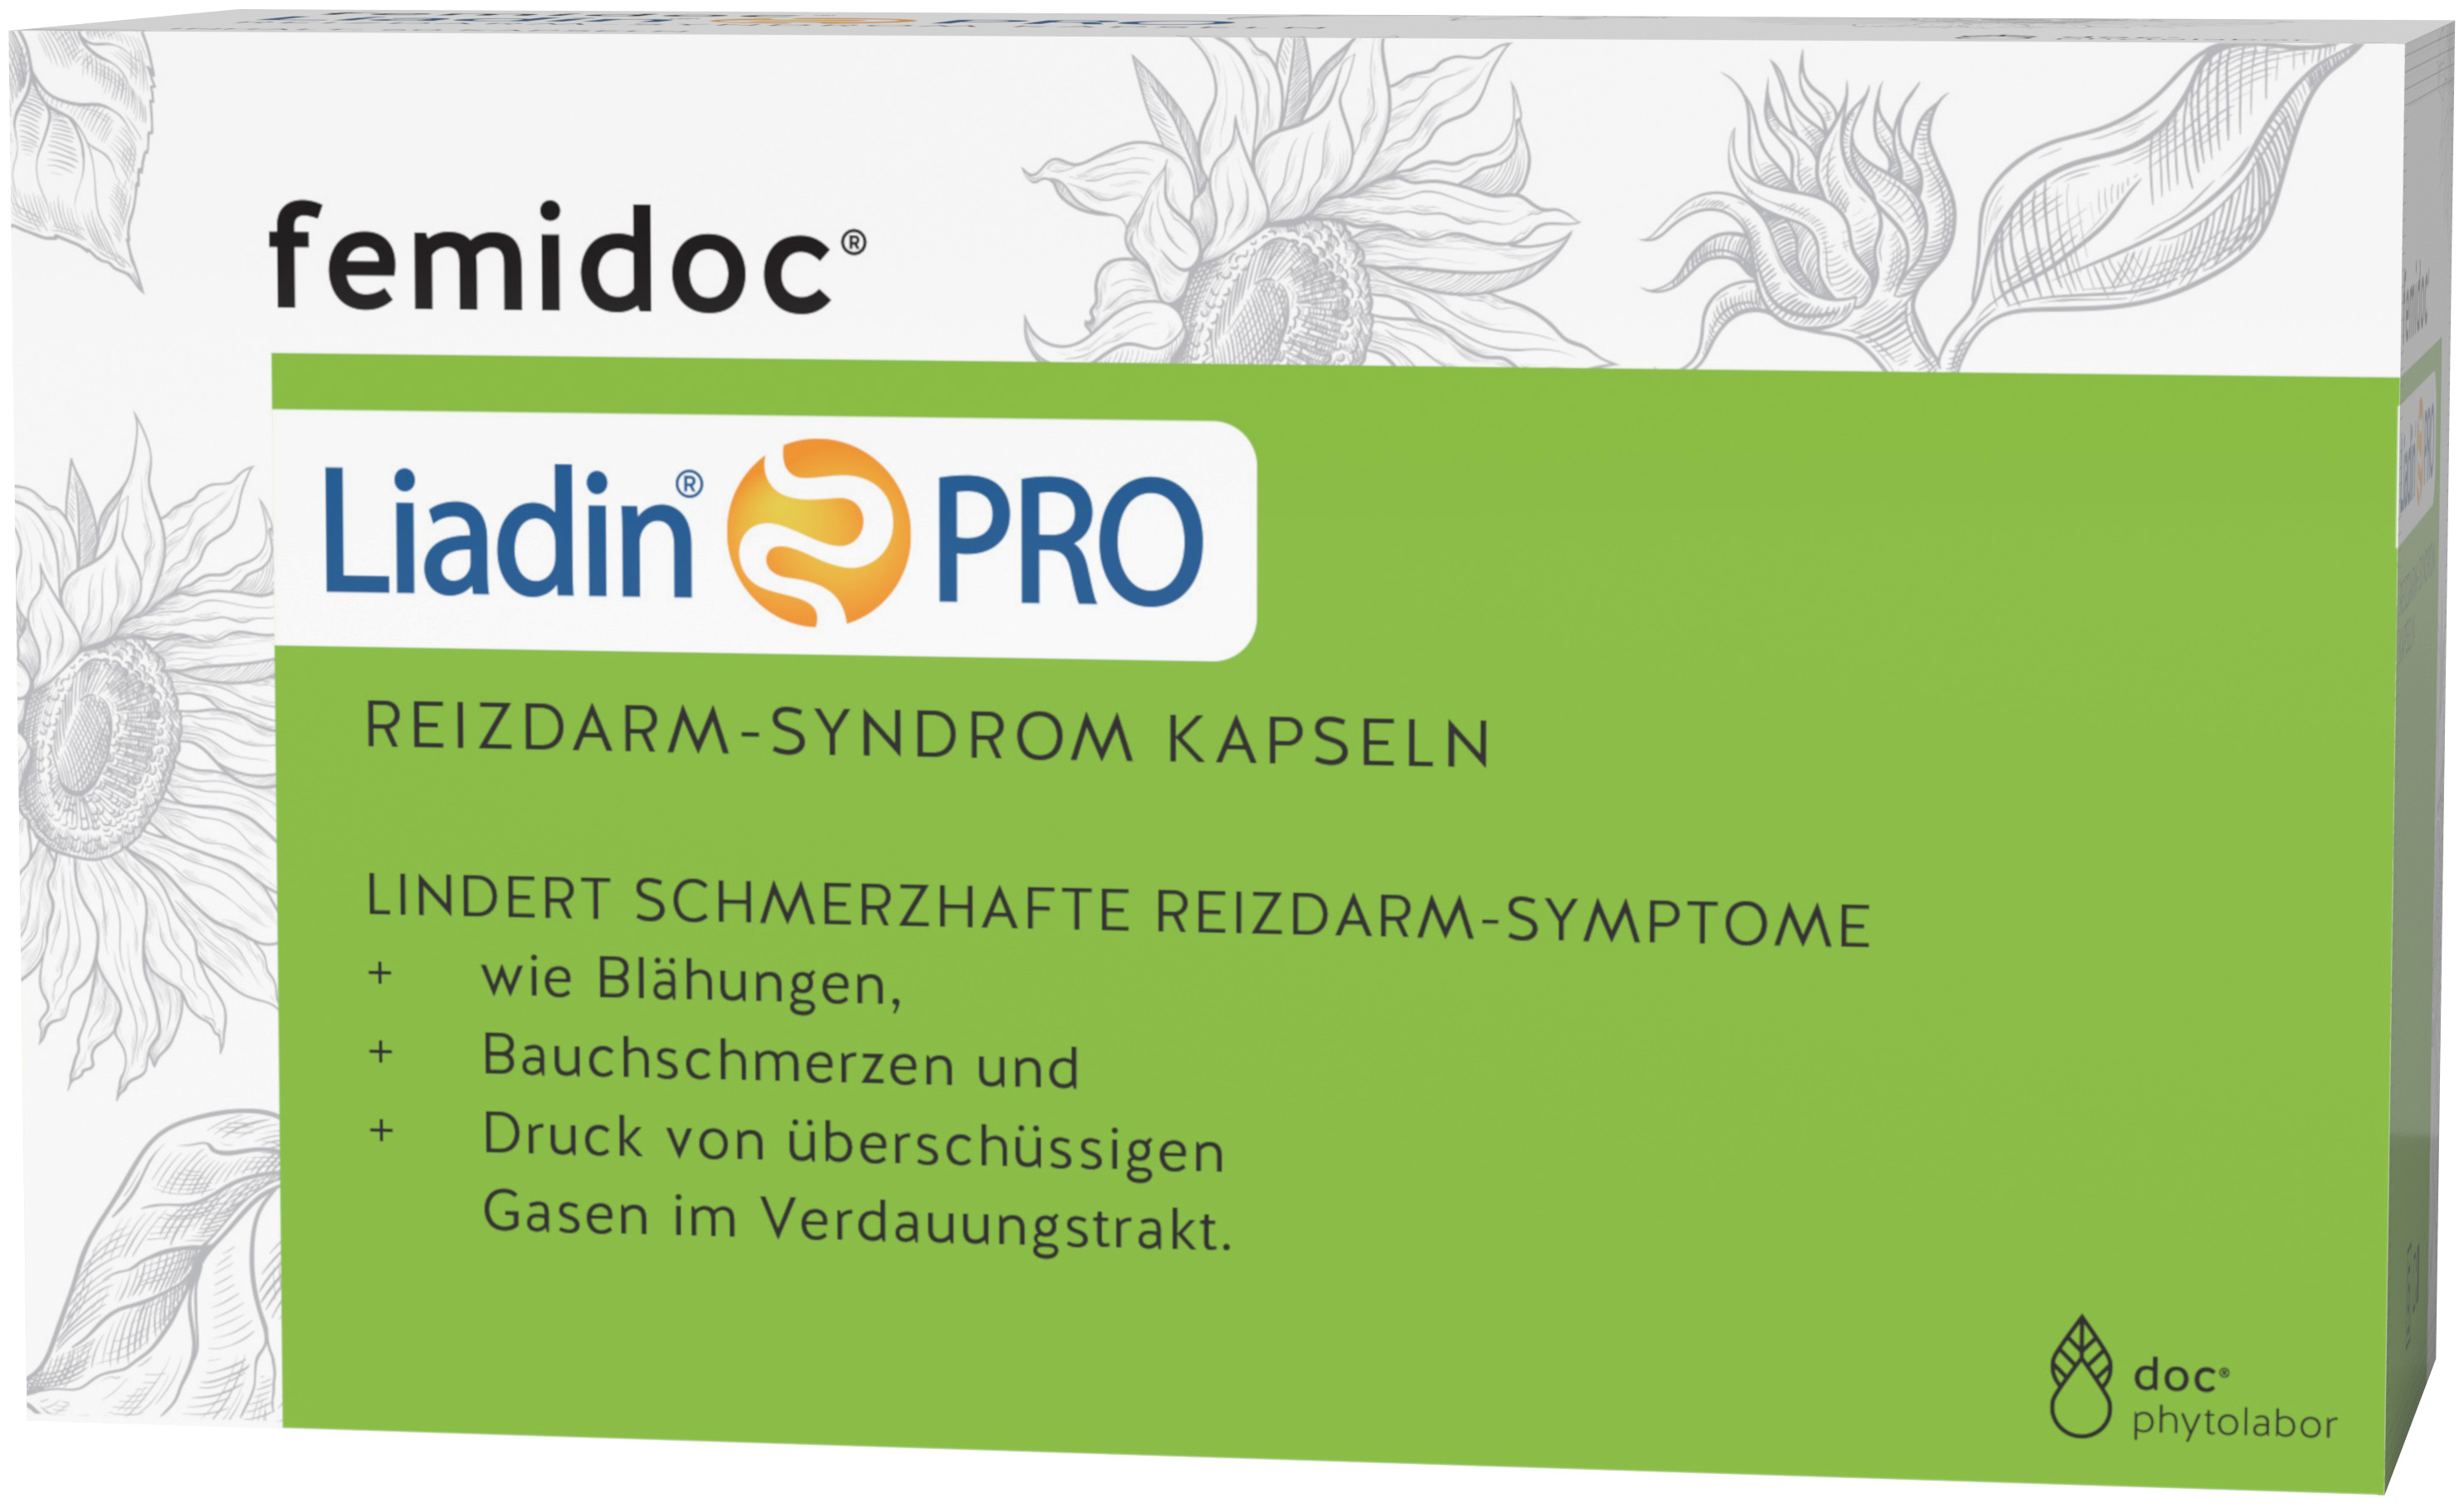 femidoc® Liadin® PRO Reizdarm-Syndrom Kapseln